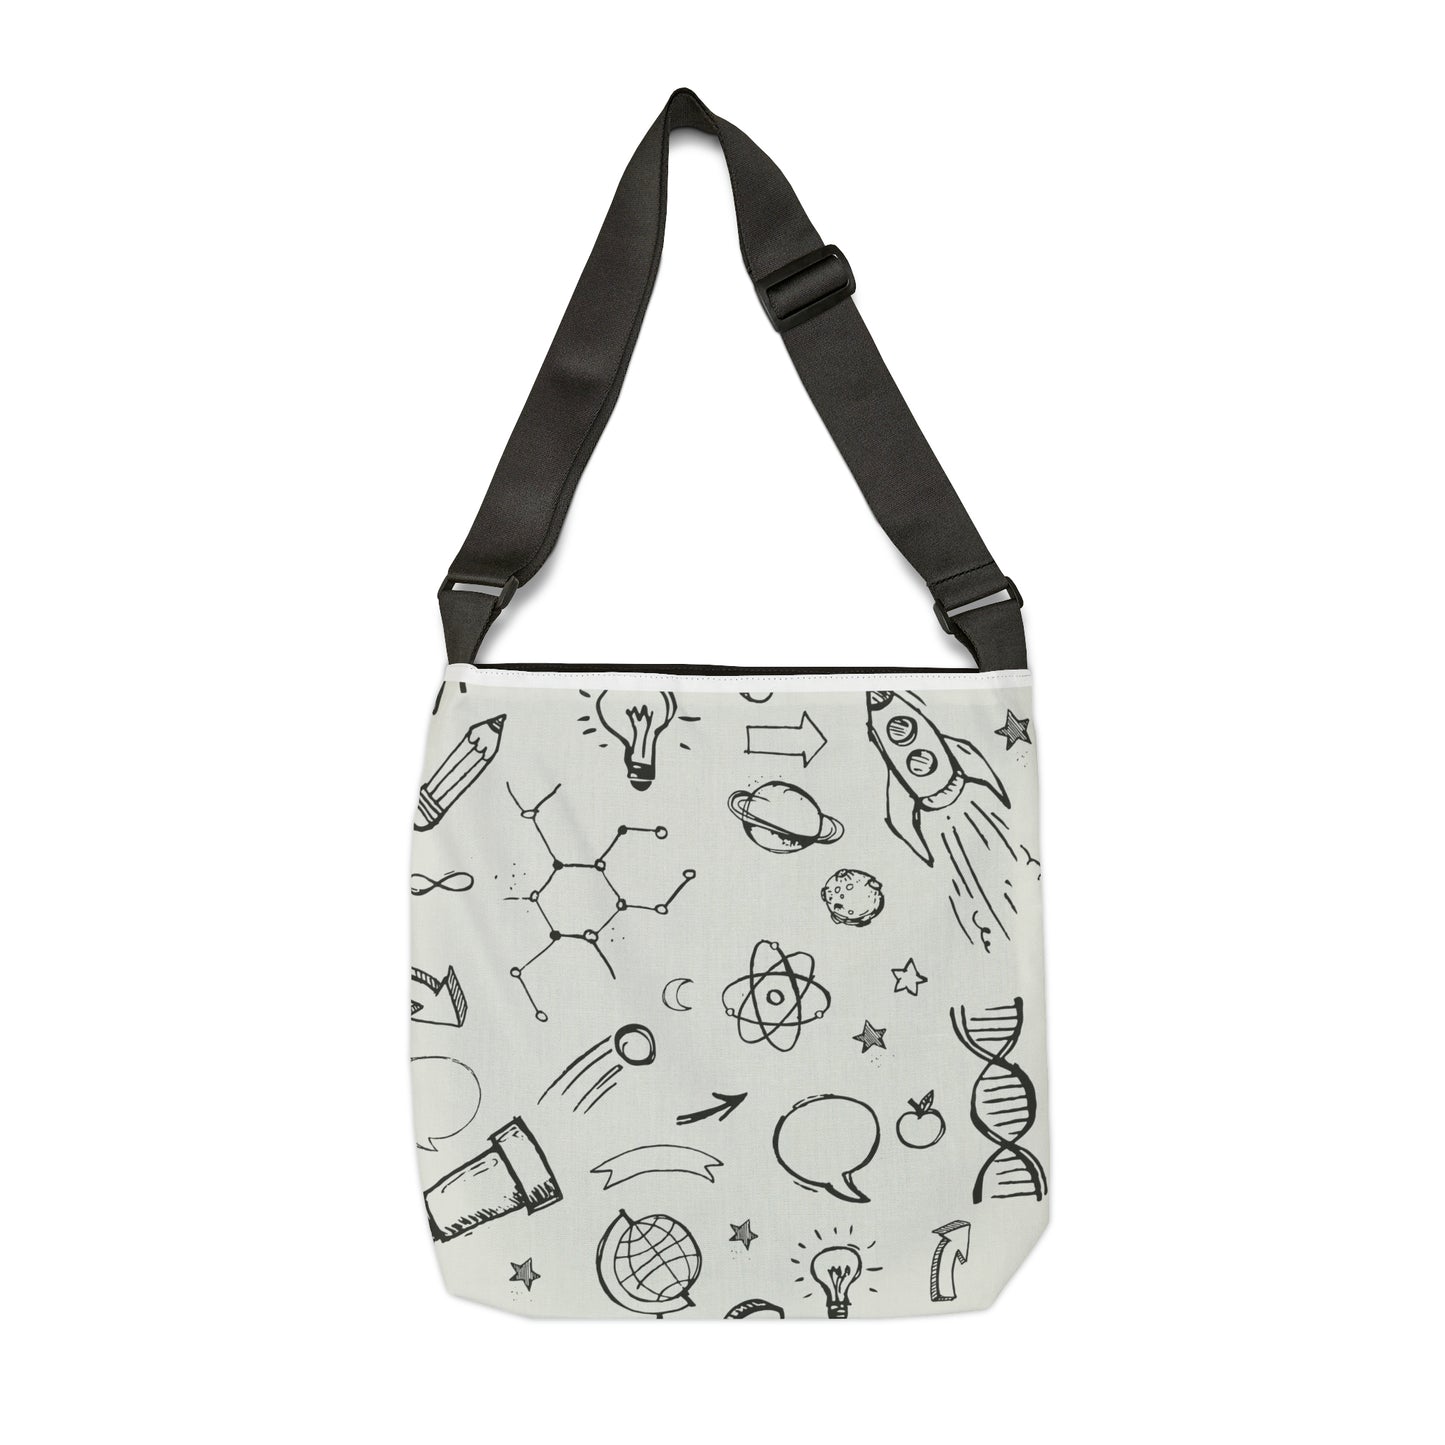 Adjustable Tote Bag (Scribble)